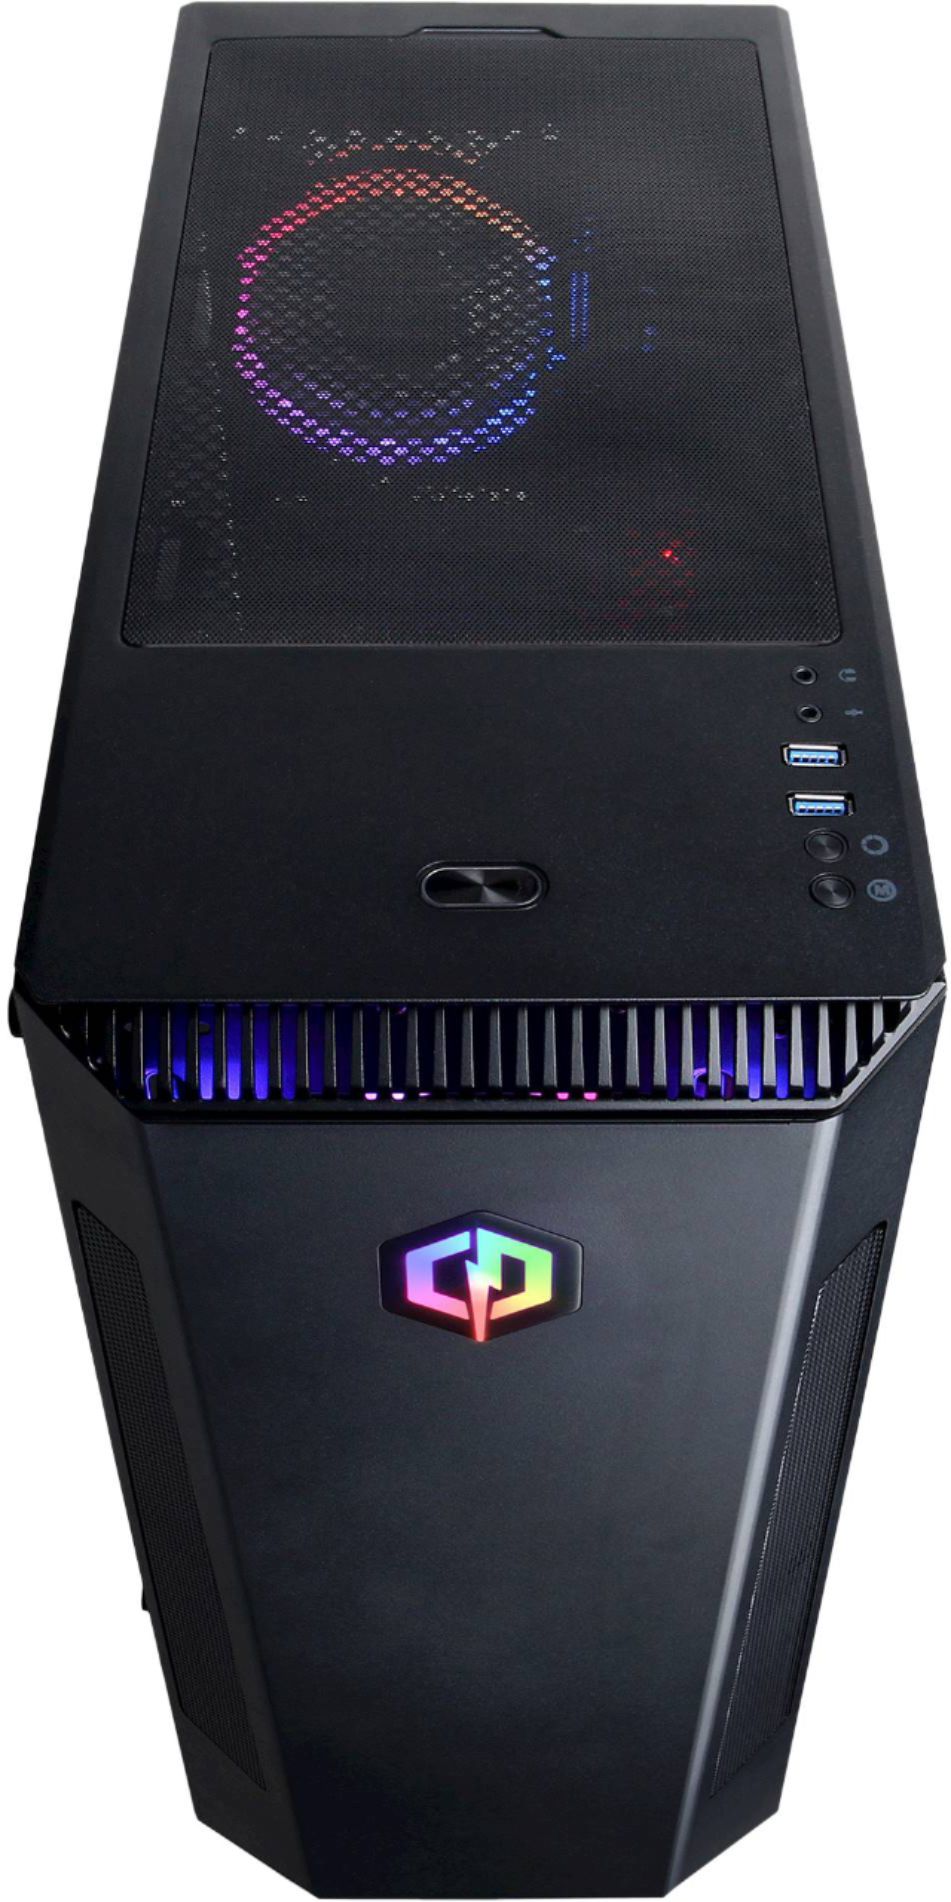 CyberPower PC C-Series ET8880 AMD RYZEN 3 Gaming Desktop - Windows